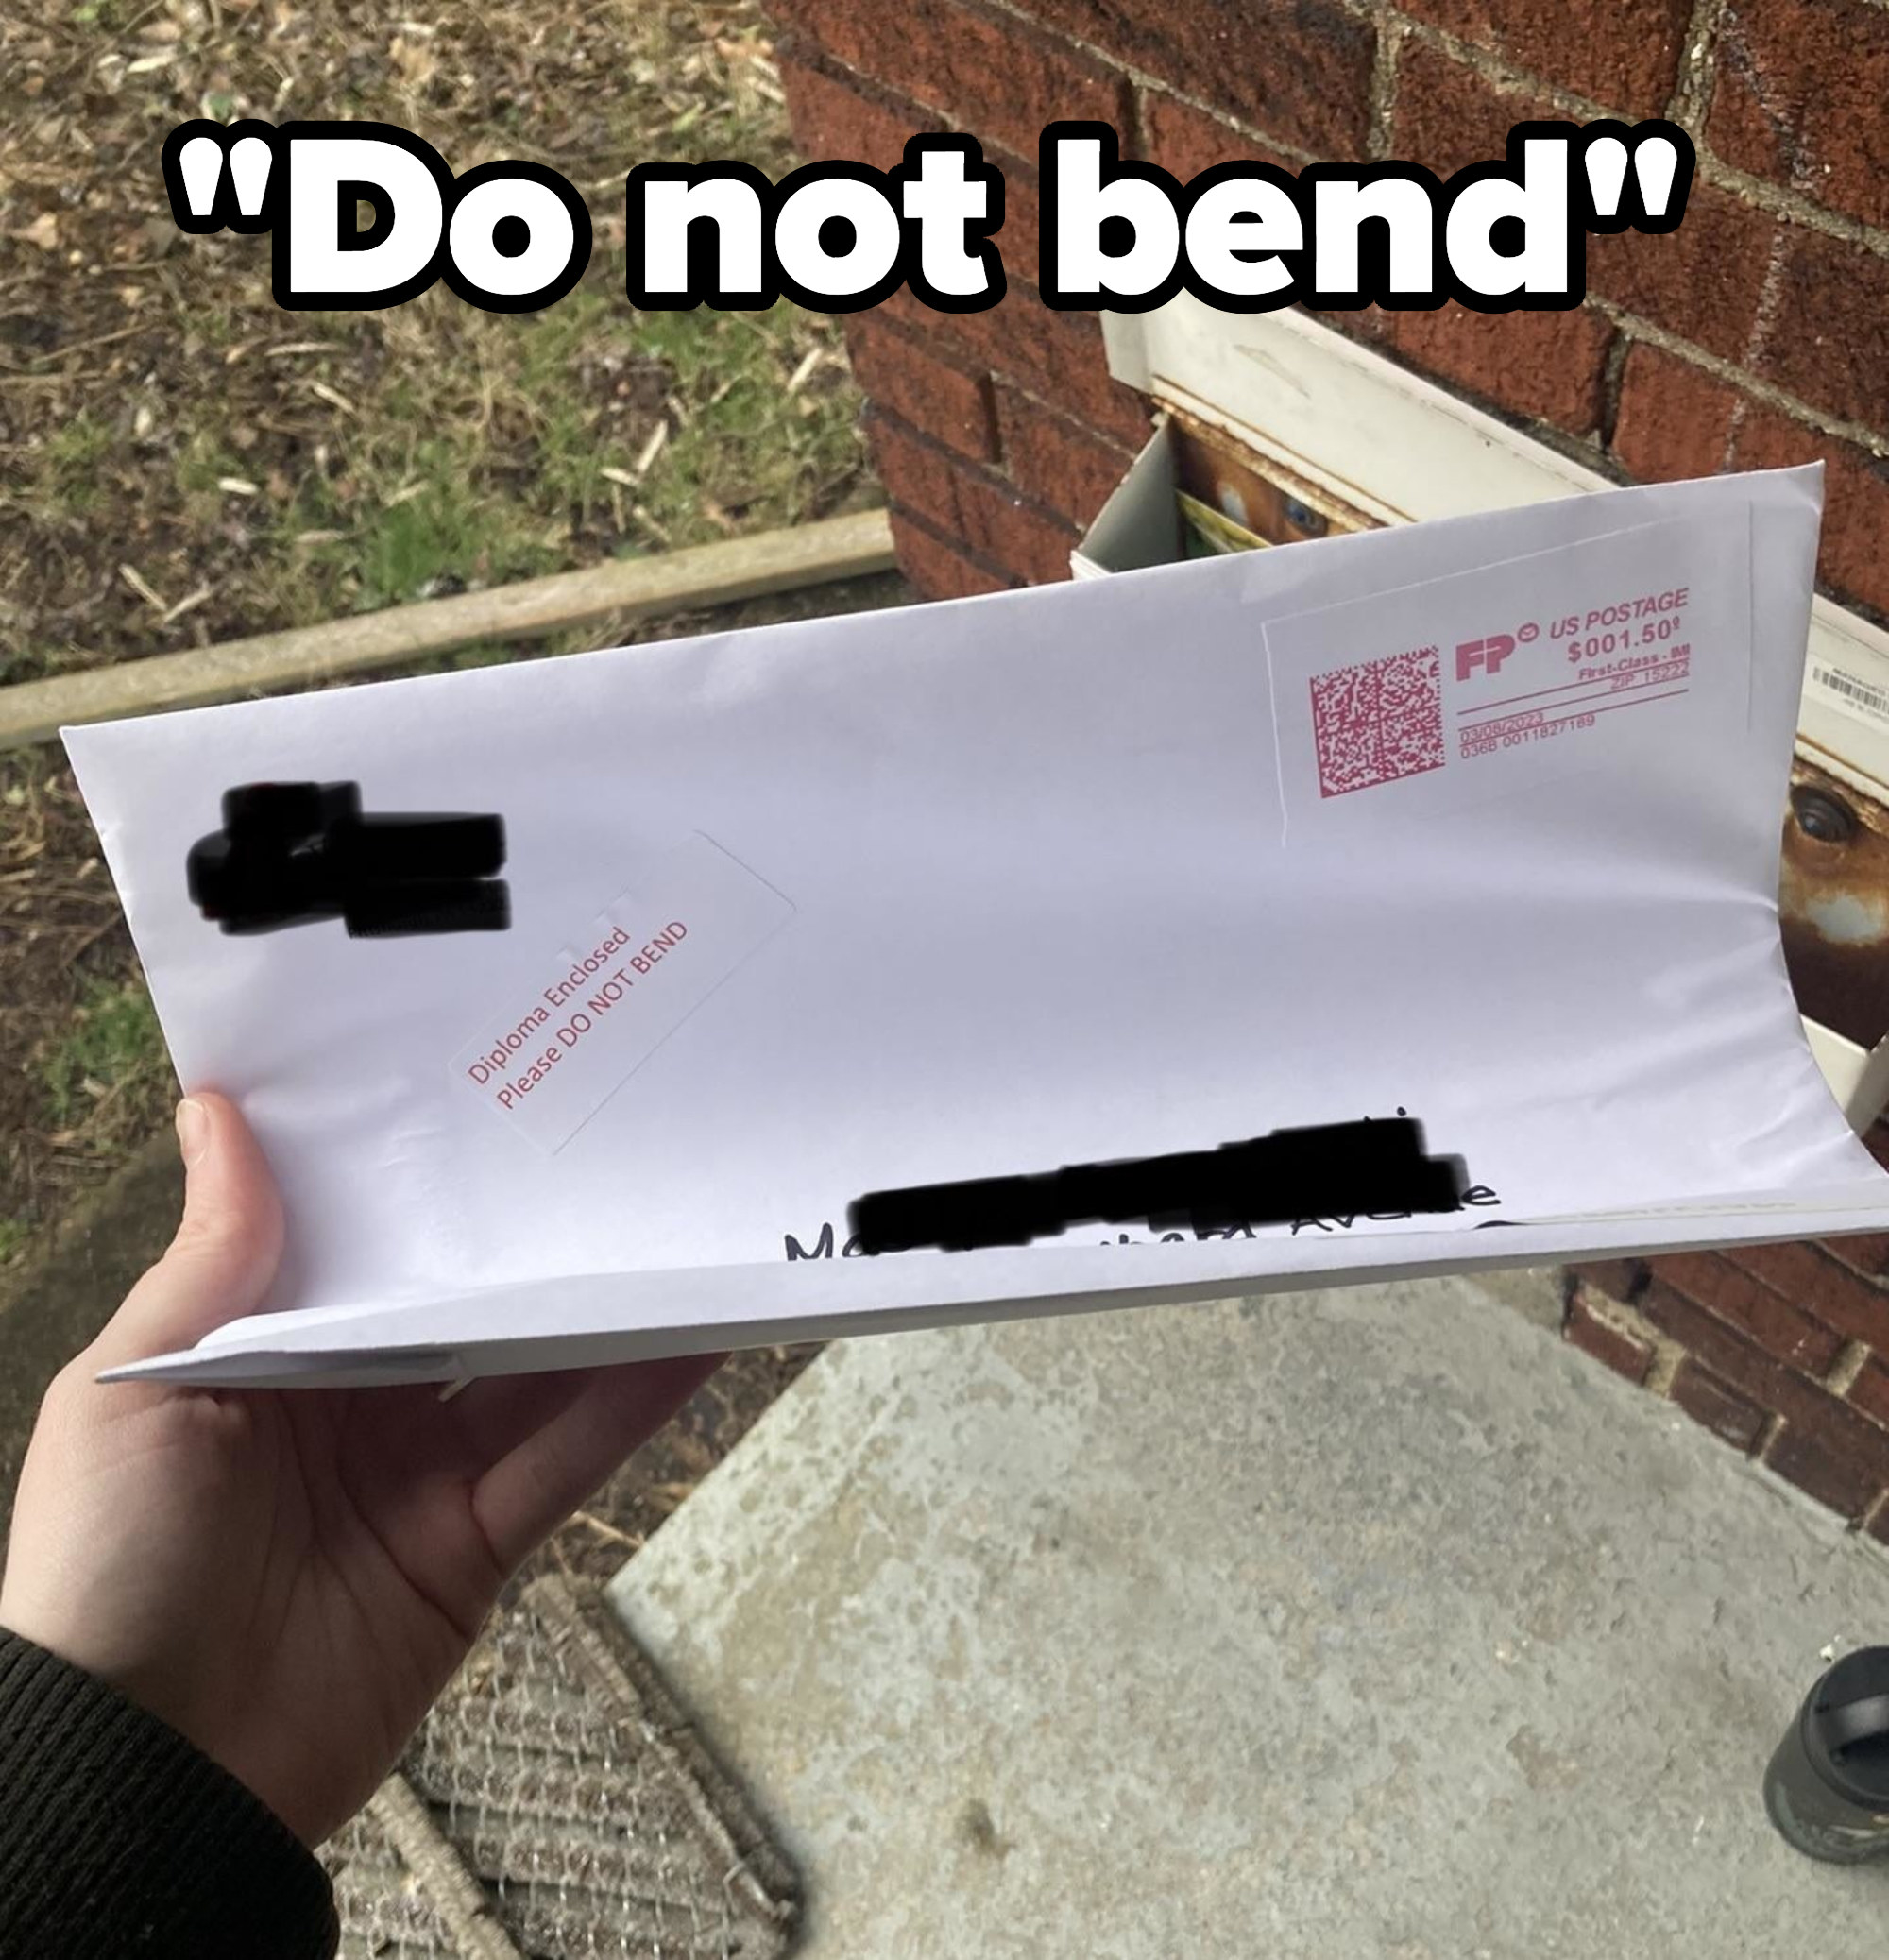 A bent envelope